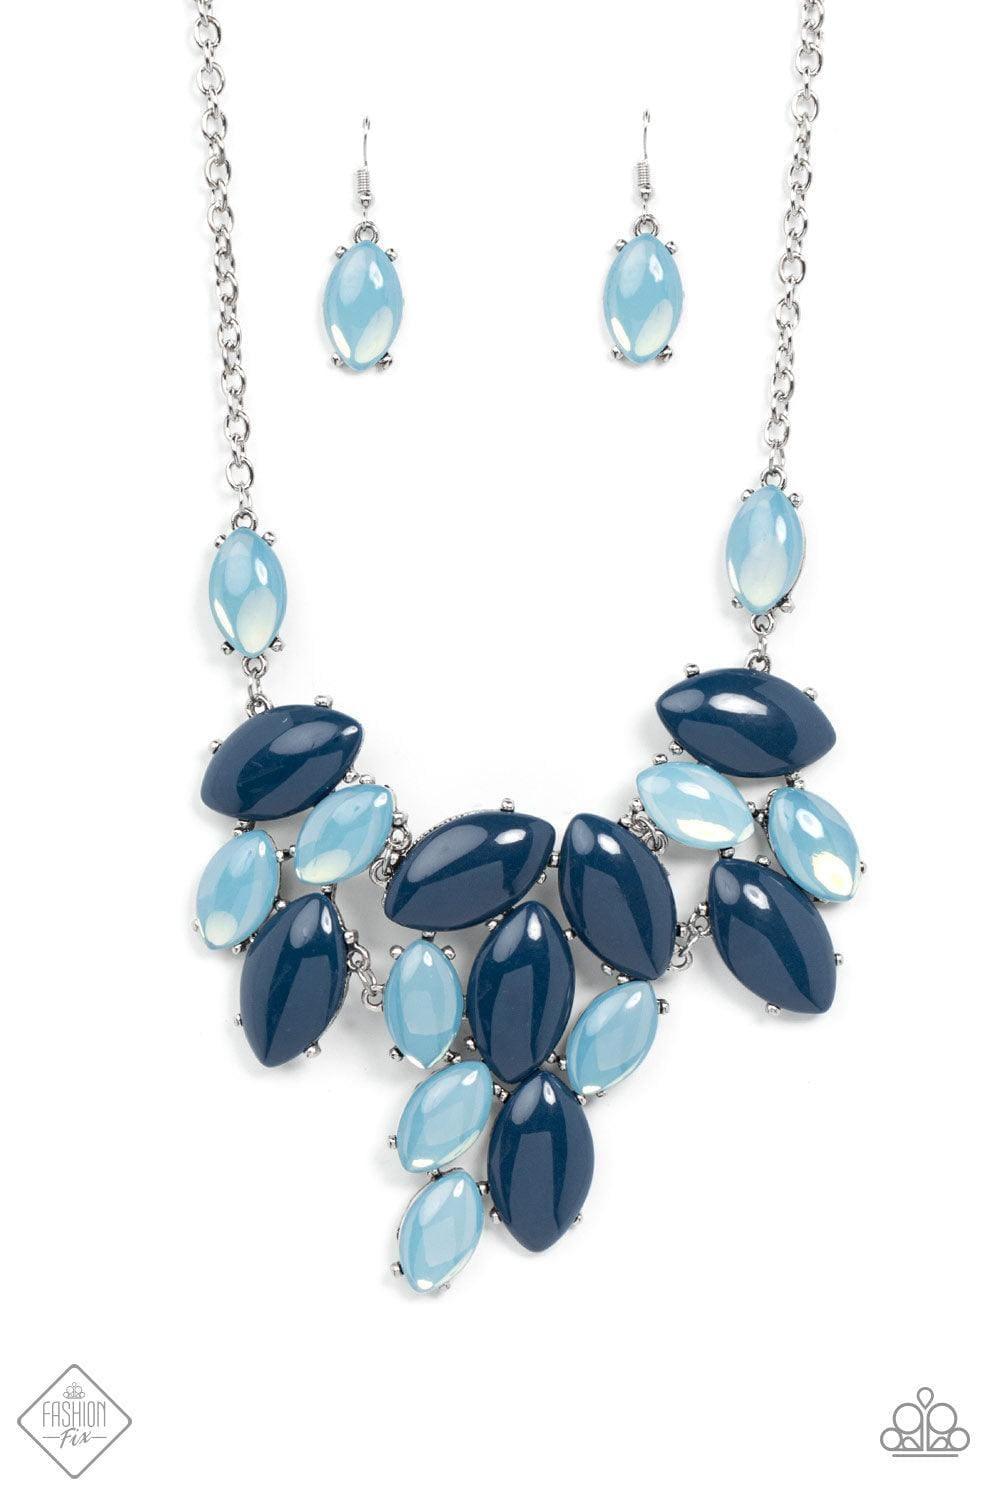 Paparazzi Accessories - Date Night Nouveau - Blue Necklace - Bling by JessieK